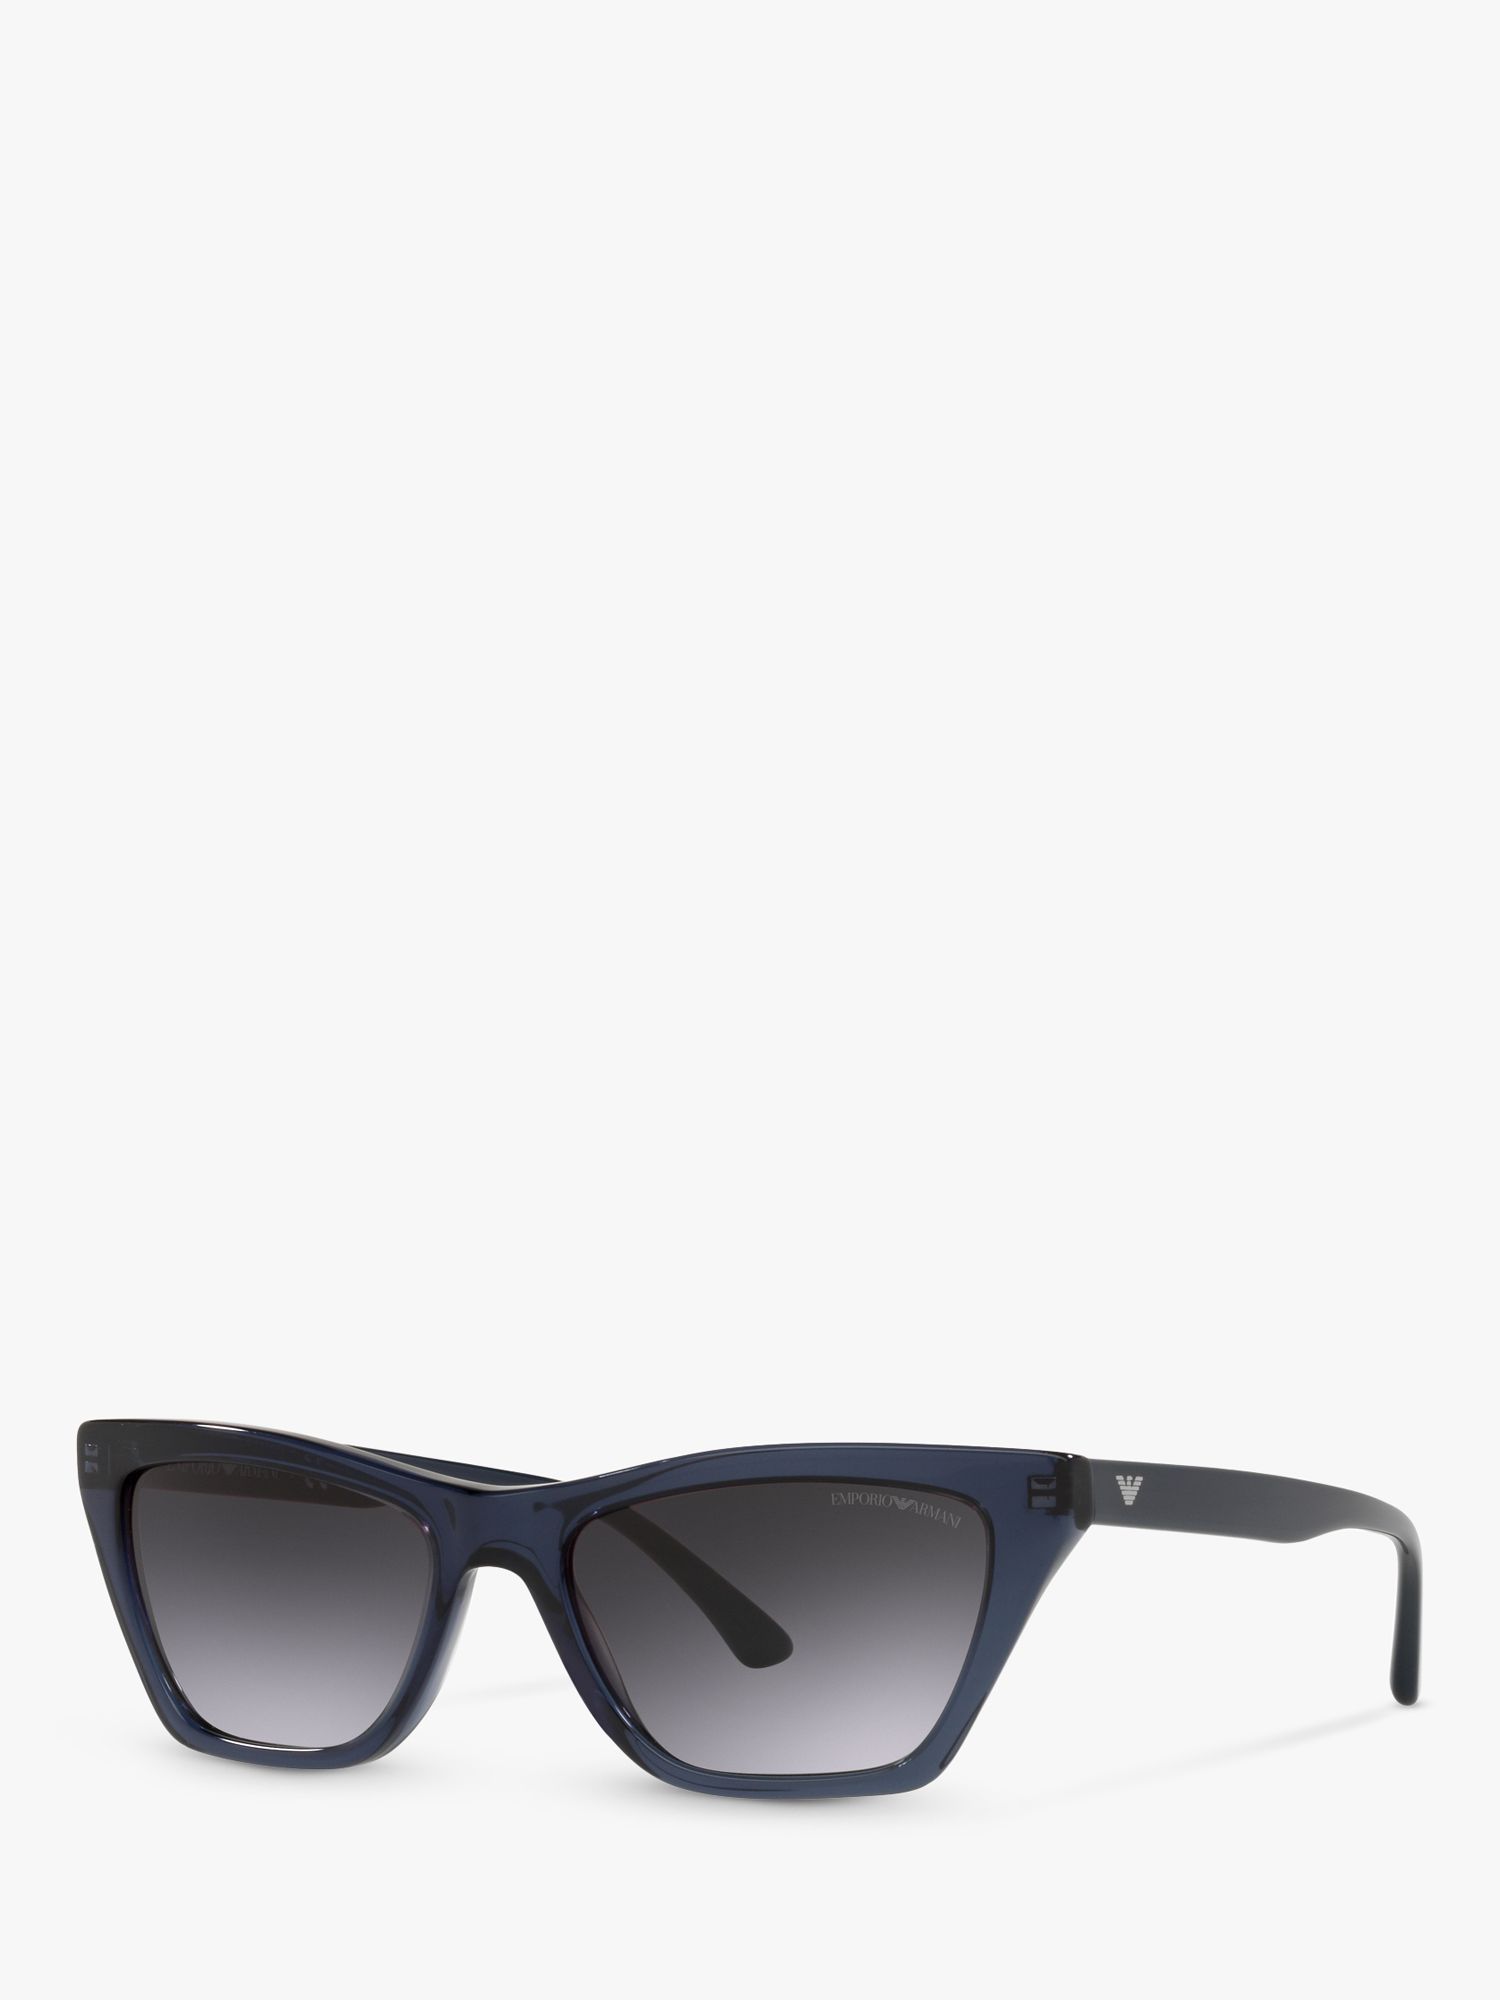 Emporio Armani EA4169 Women's Cat's Eye Sunglasses, Blue/Grey Gradient at  John Lewis & Partners